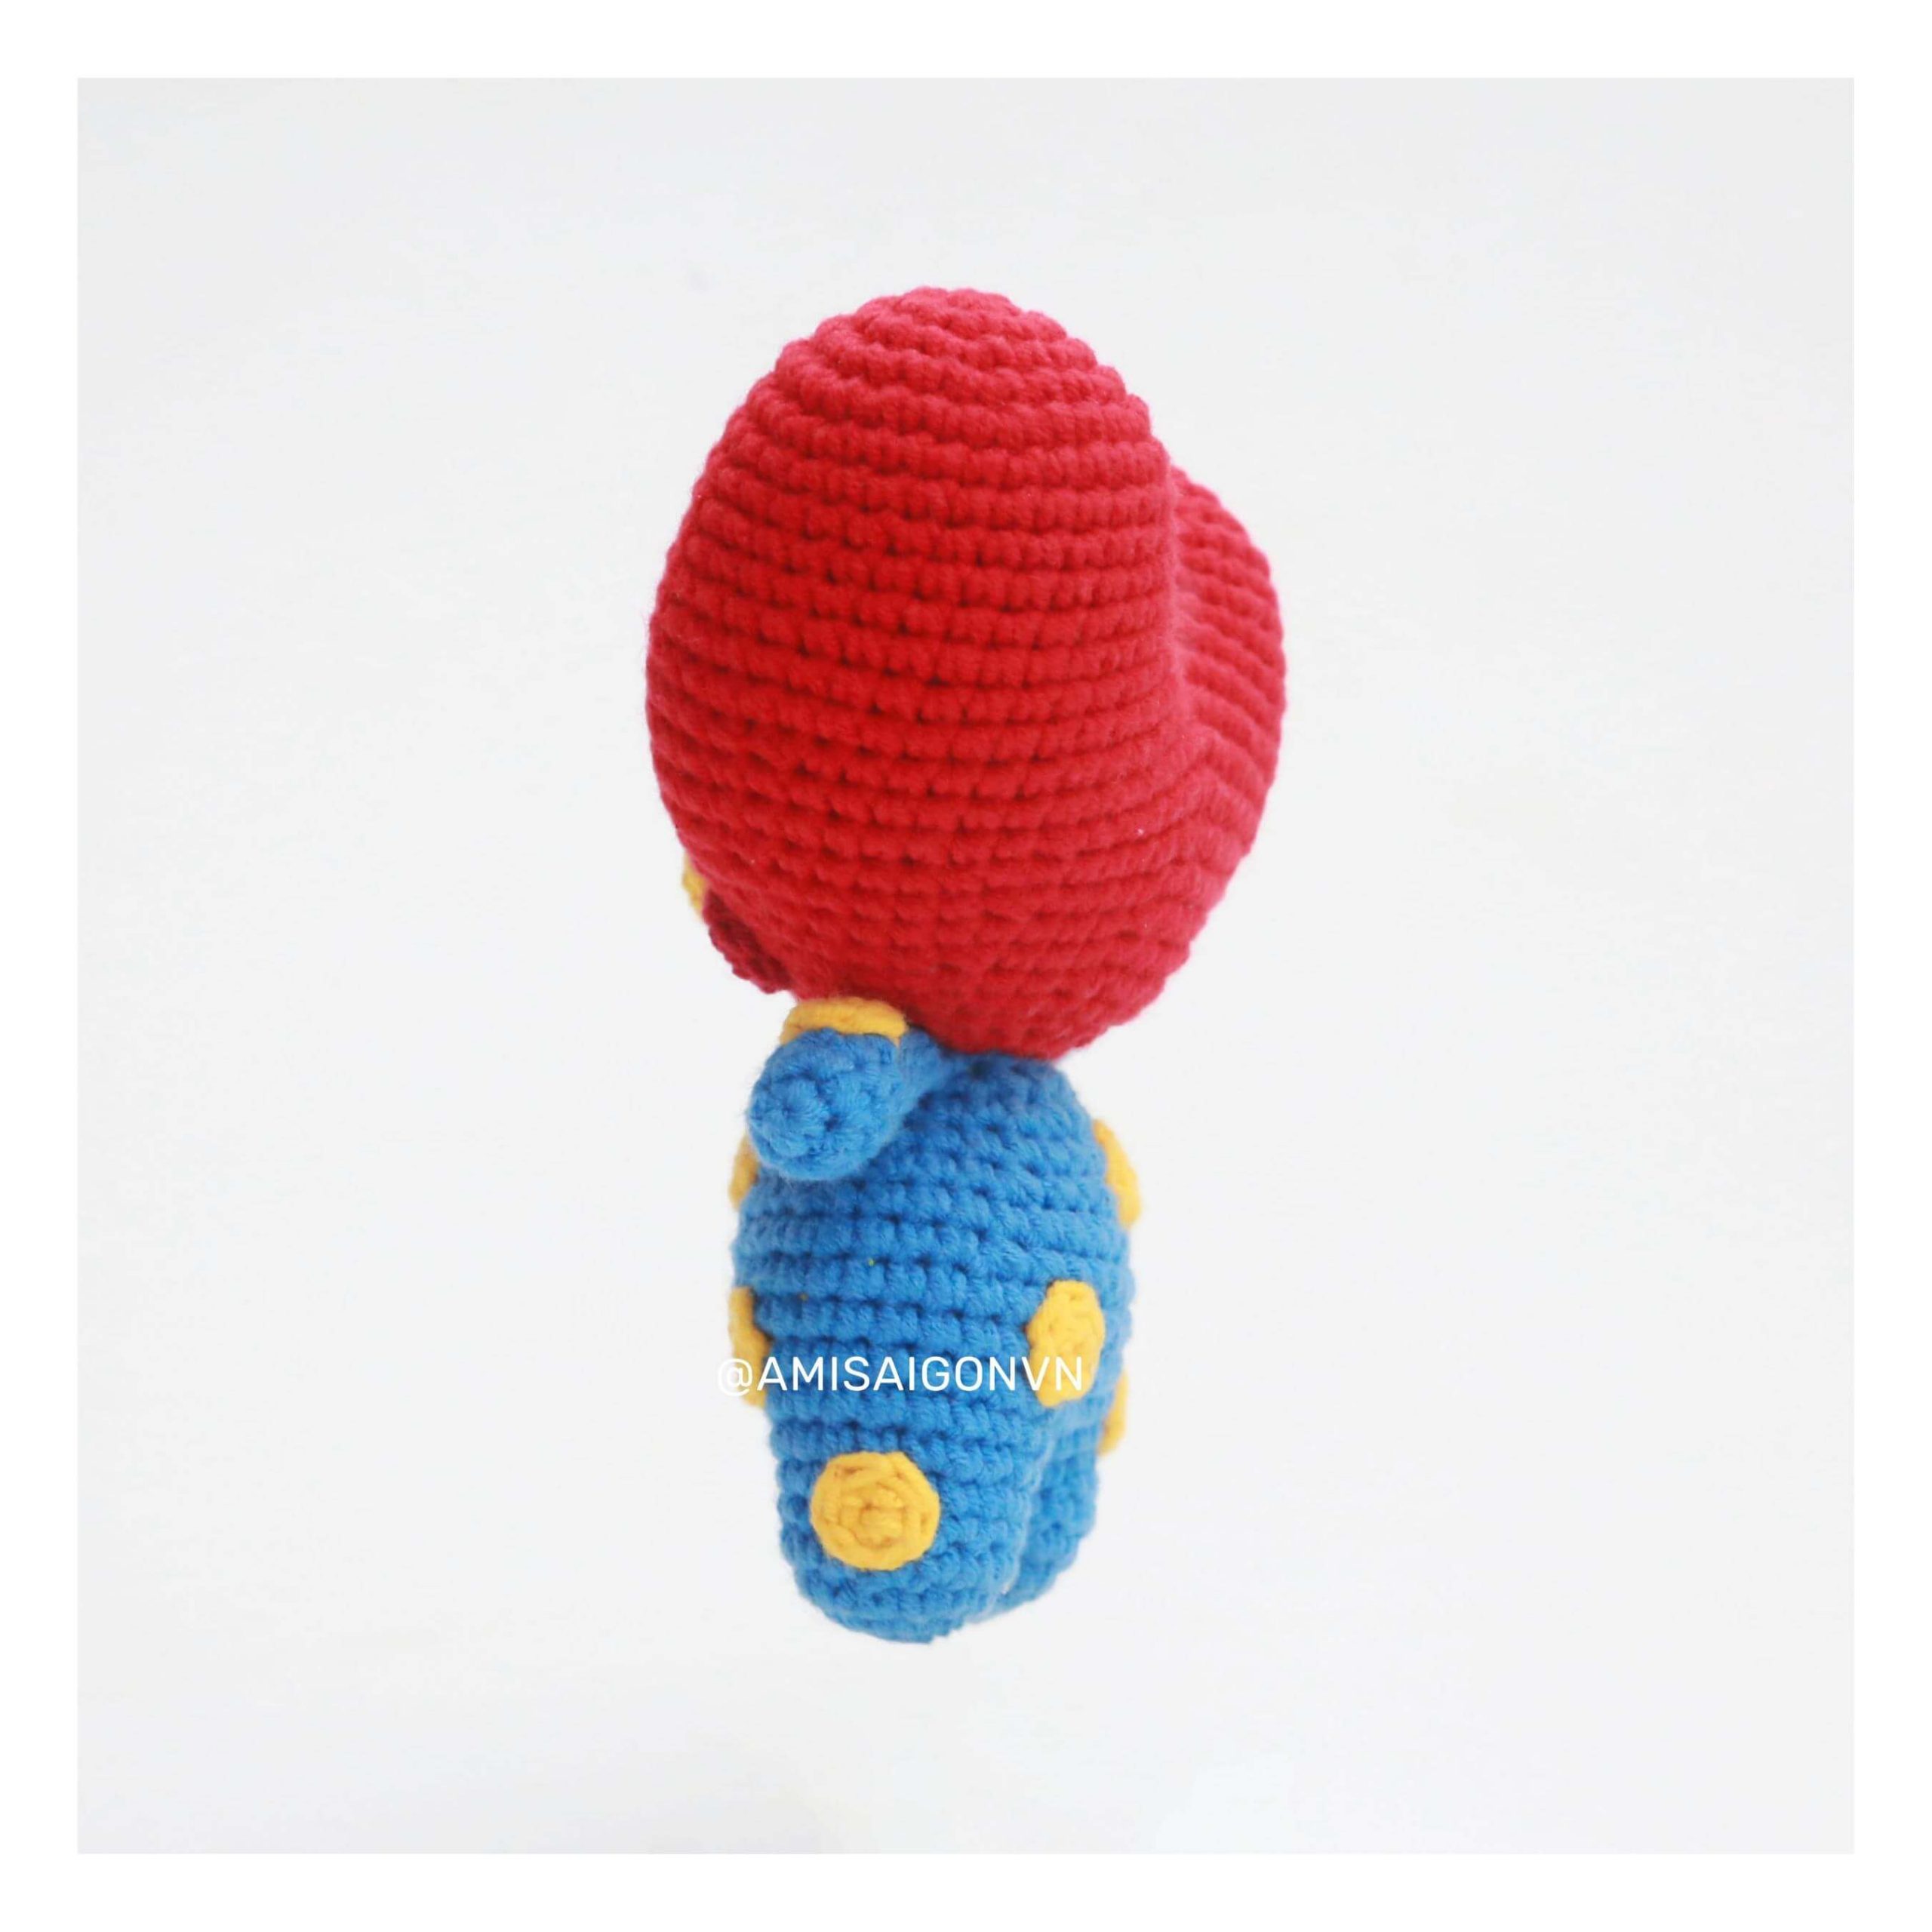 tata-amigurumi-crochet-pattern-amisaigon (4)